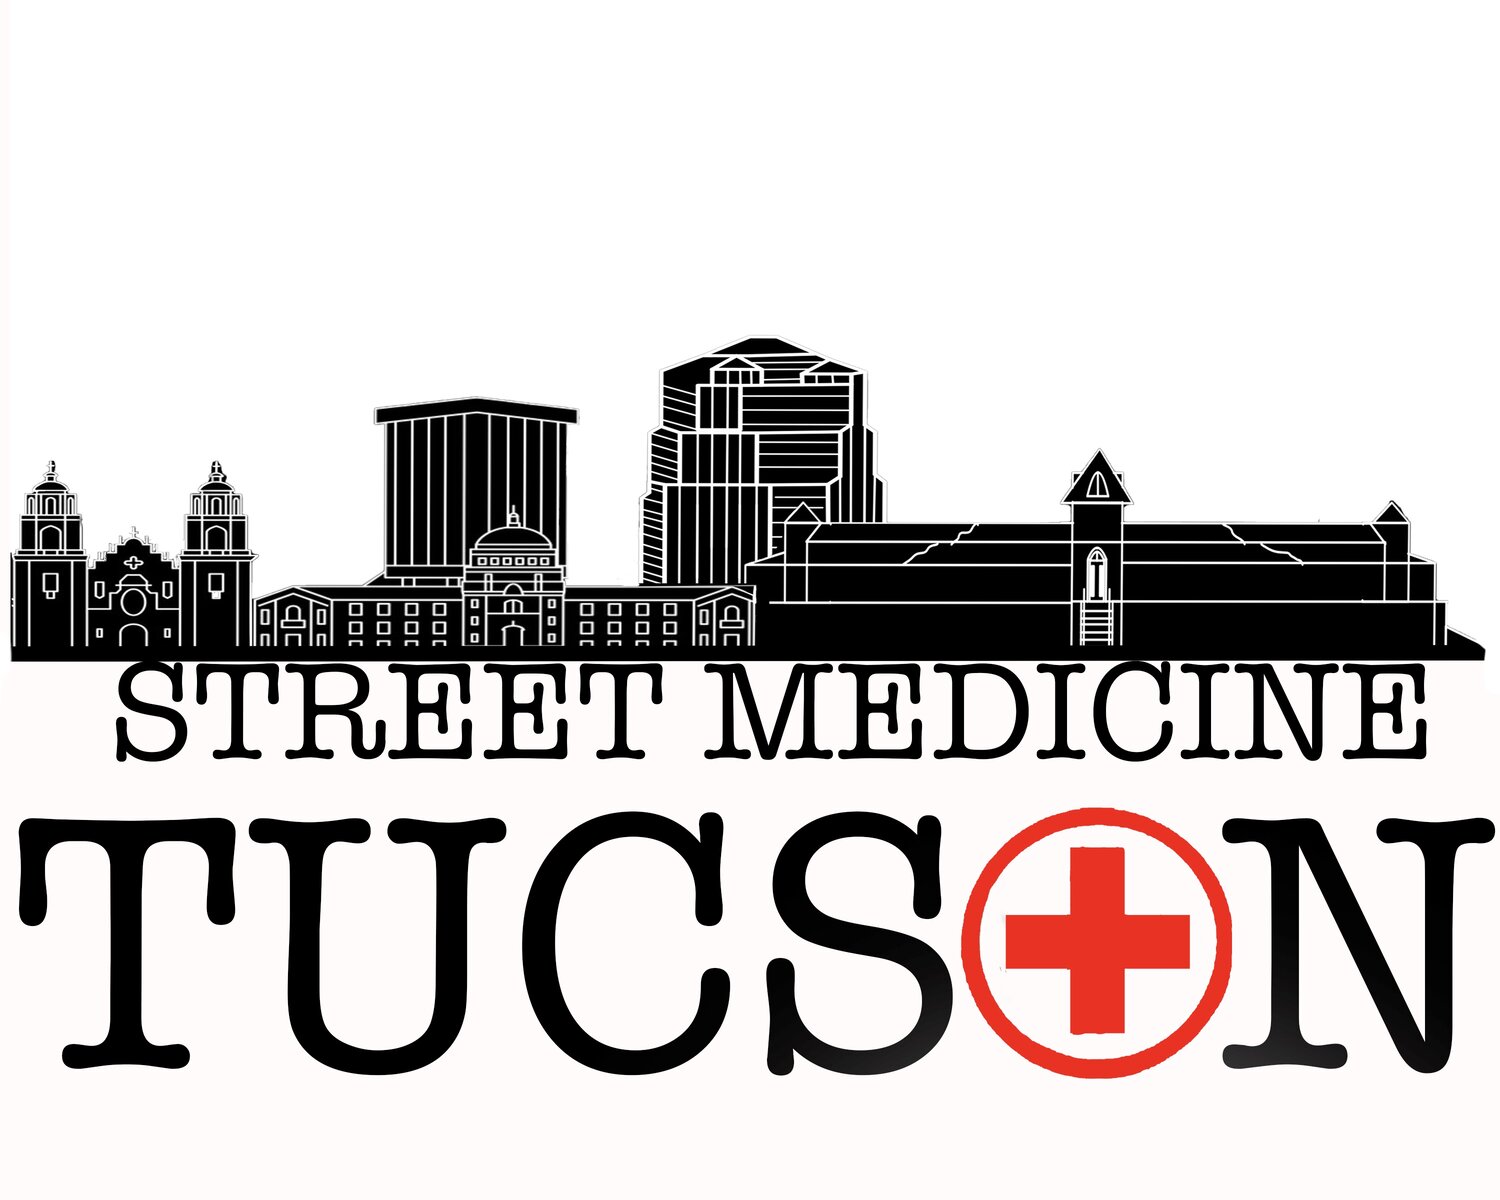 Street Medicine Tucson